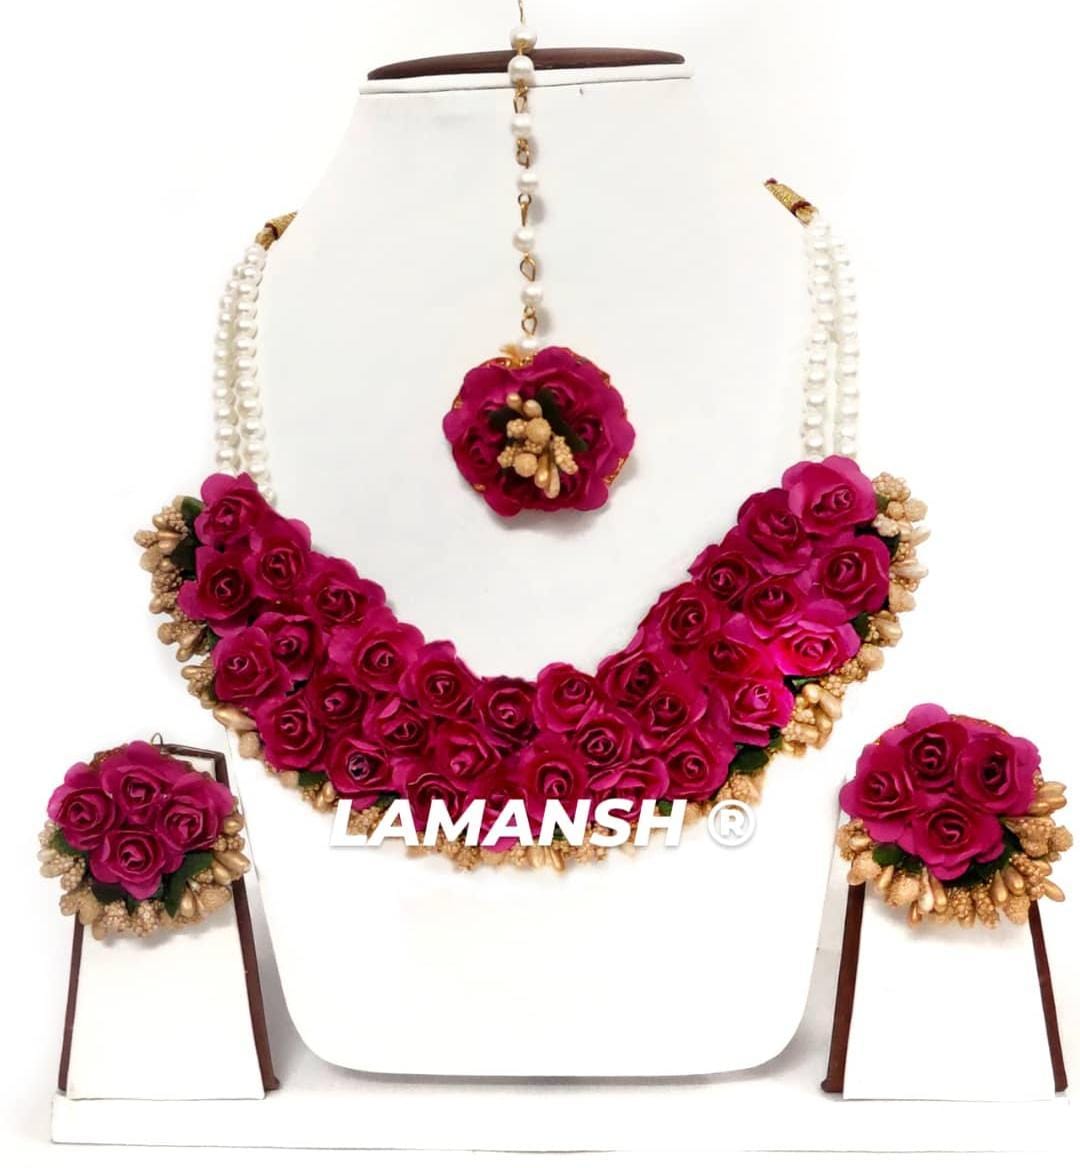 Lamansh Necklace, Earrings, Maangtika set 1 Necklace, 2  Earrings ,1 Maangtika Set / Maroon Gold LAMANSH® Handmade Flower Jewellery Set For Women & Girls / Haldi Set